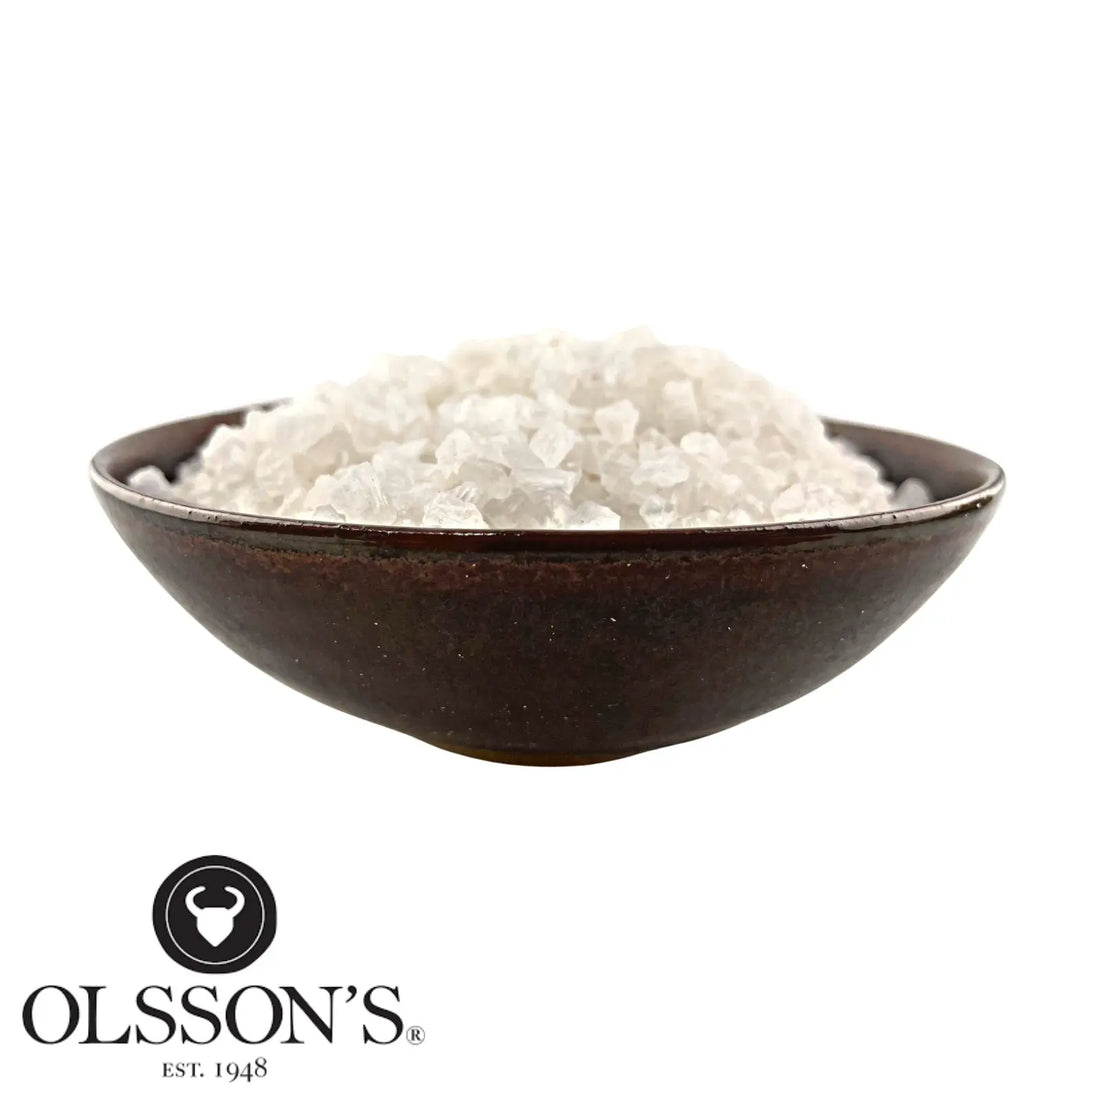 Sea Salt Rock 1kg-Grocery-Olsson's Pacific-Sovereign Foods-Salt-Australian Produced-Australian Bulk Foods